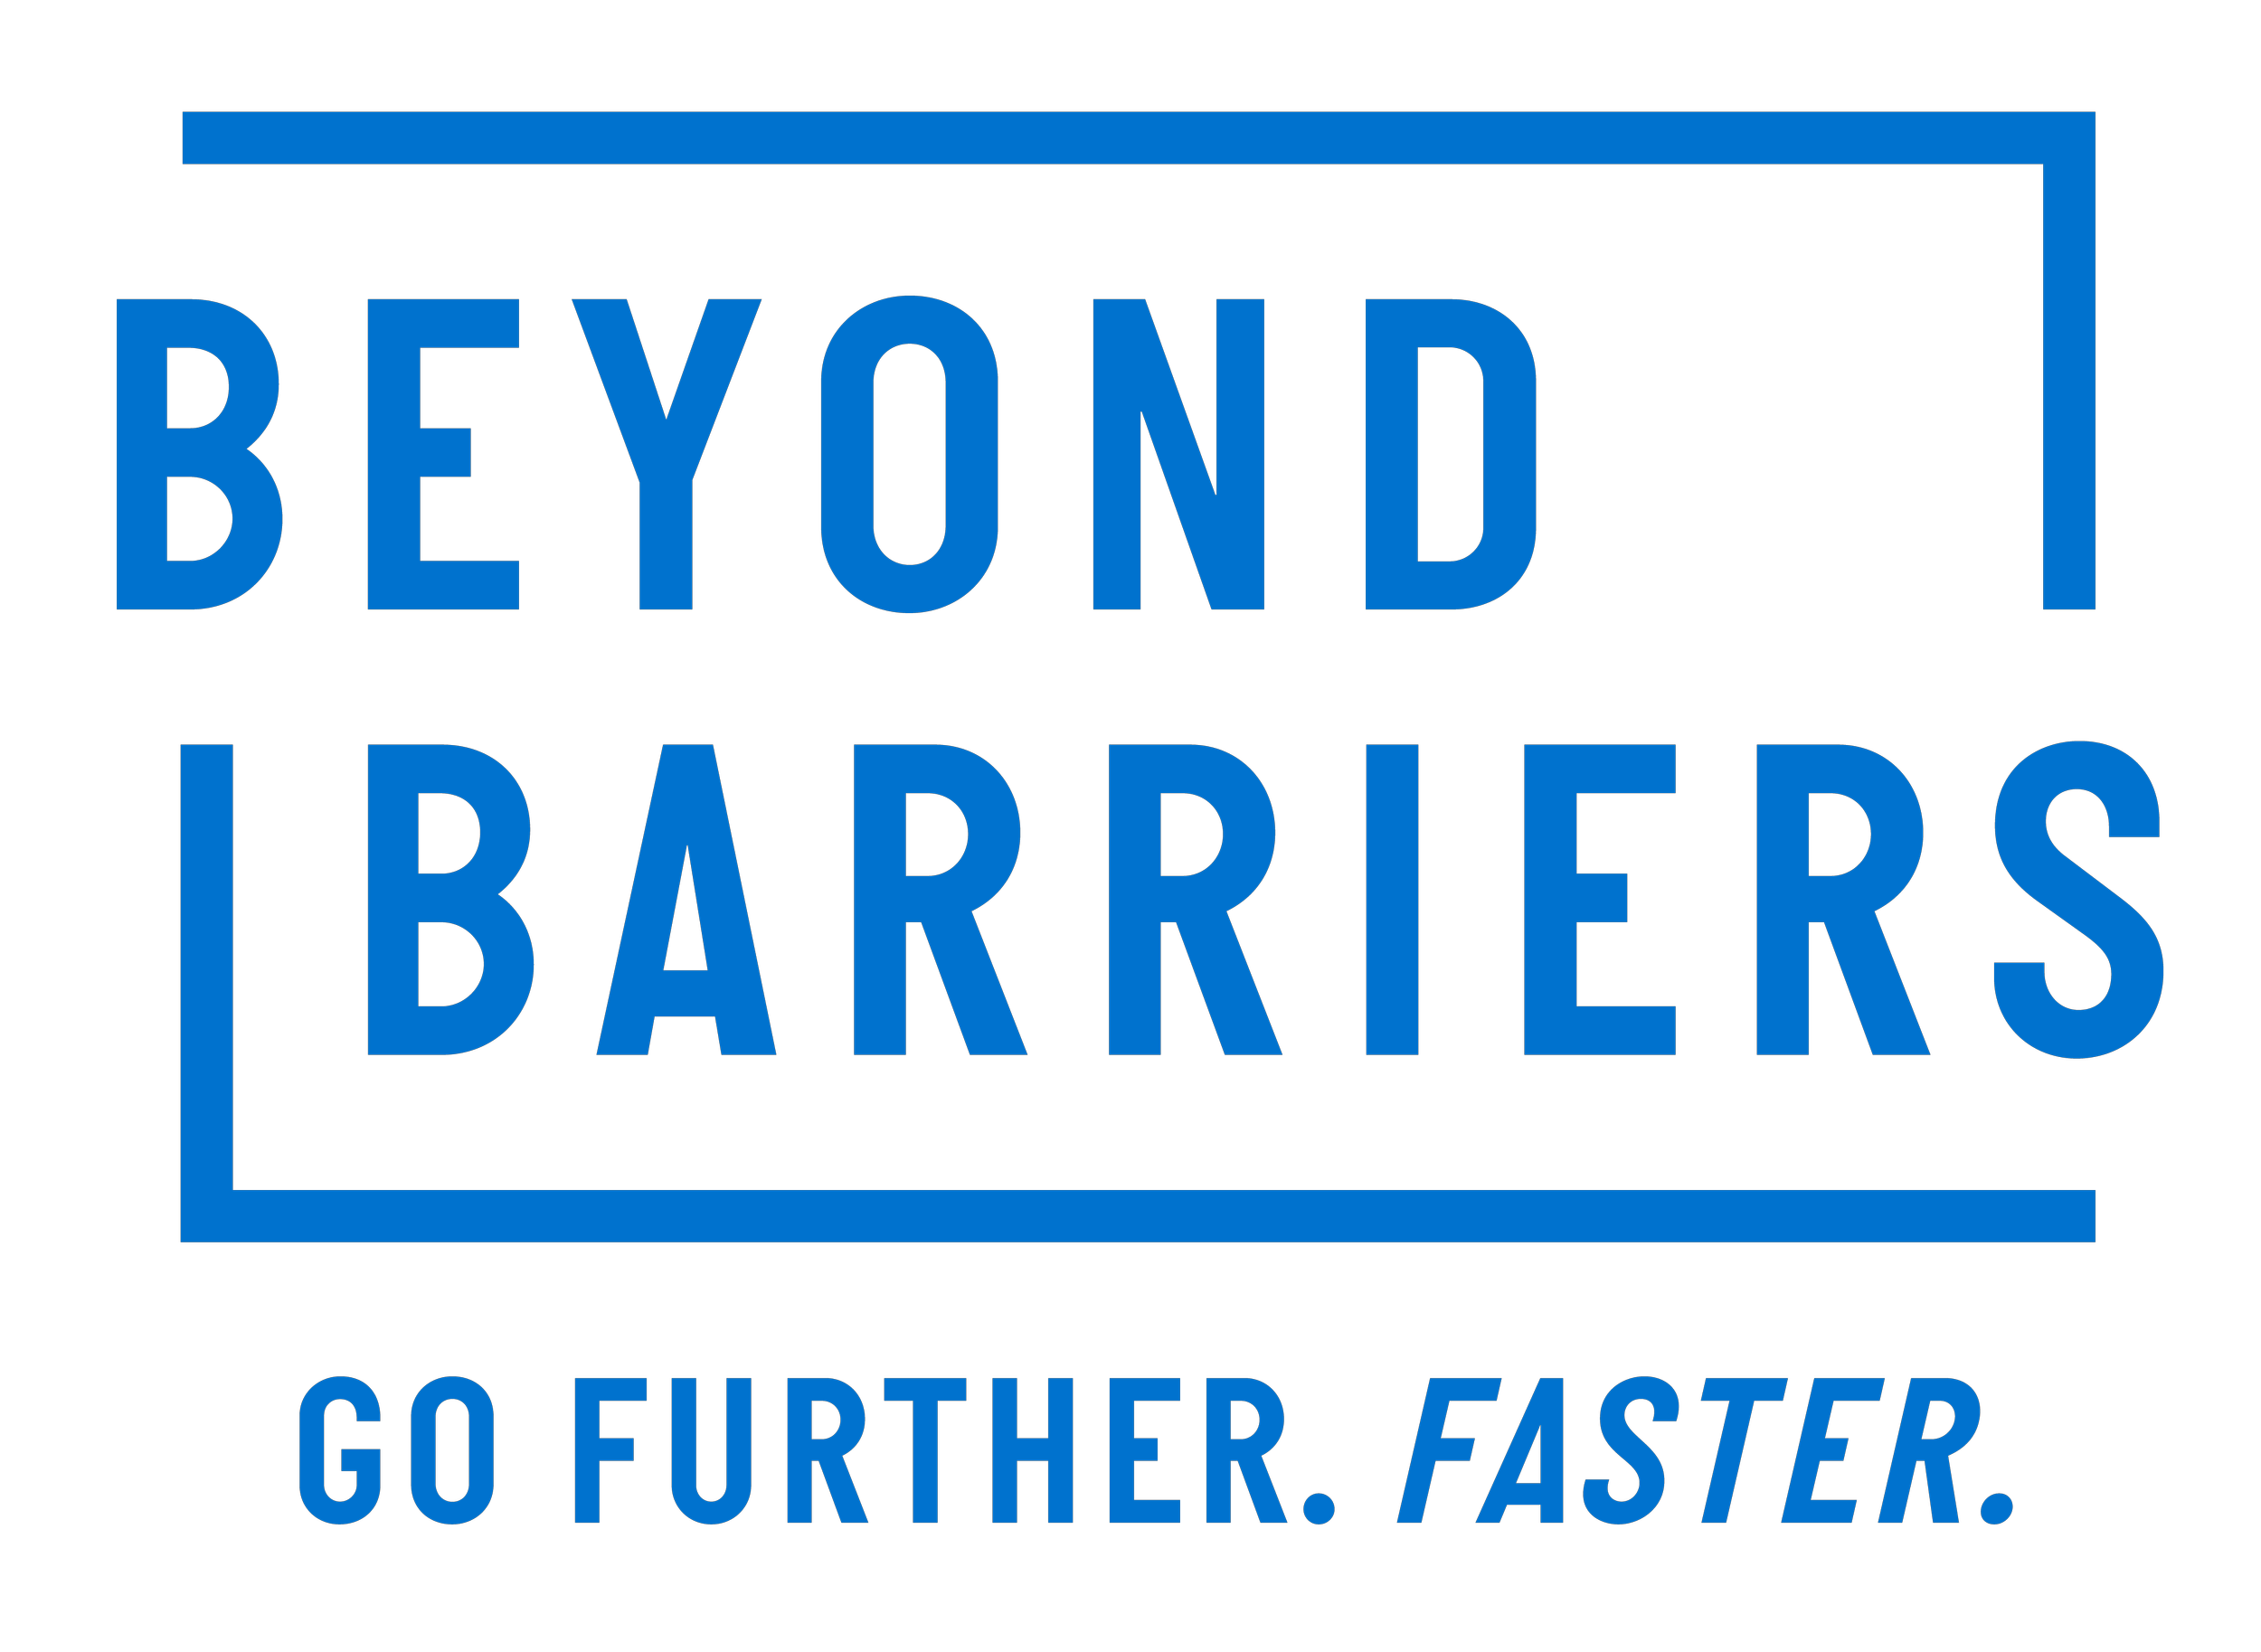 Beyond Barriers, USA